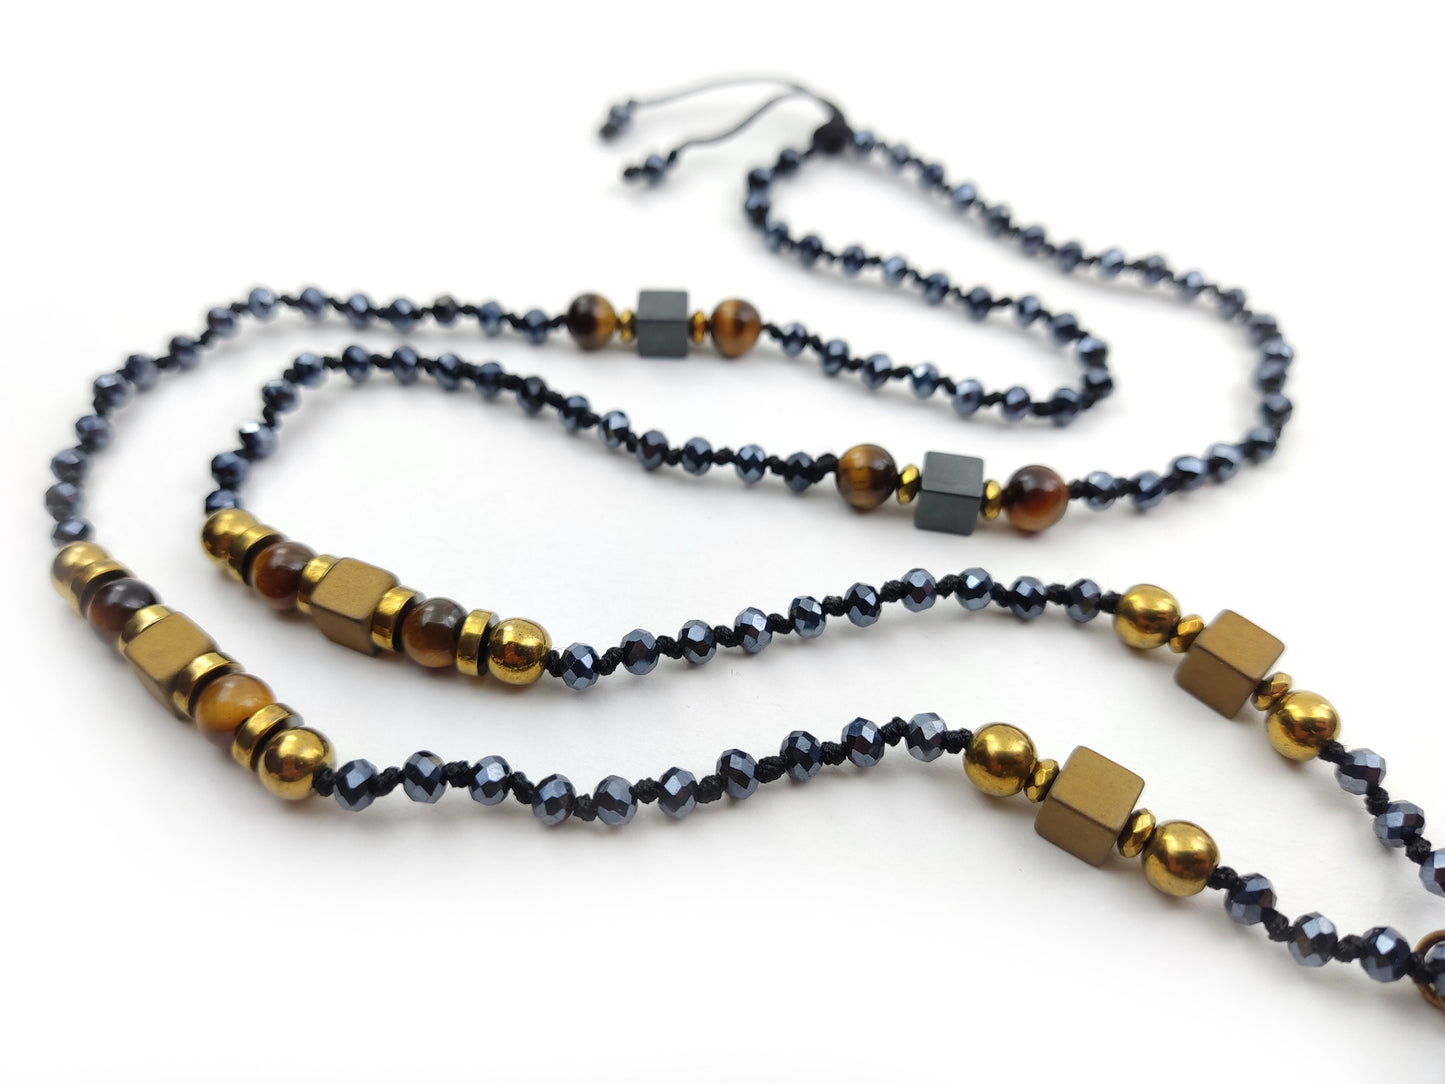 Handmade Long Semi Precious Stones Necklace, Drop Pendant With Marcasite - Mother Of Pearl, 70cm, Griechische Halskette Schmuck, Jewelry